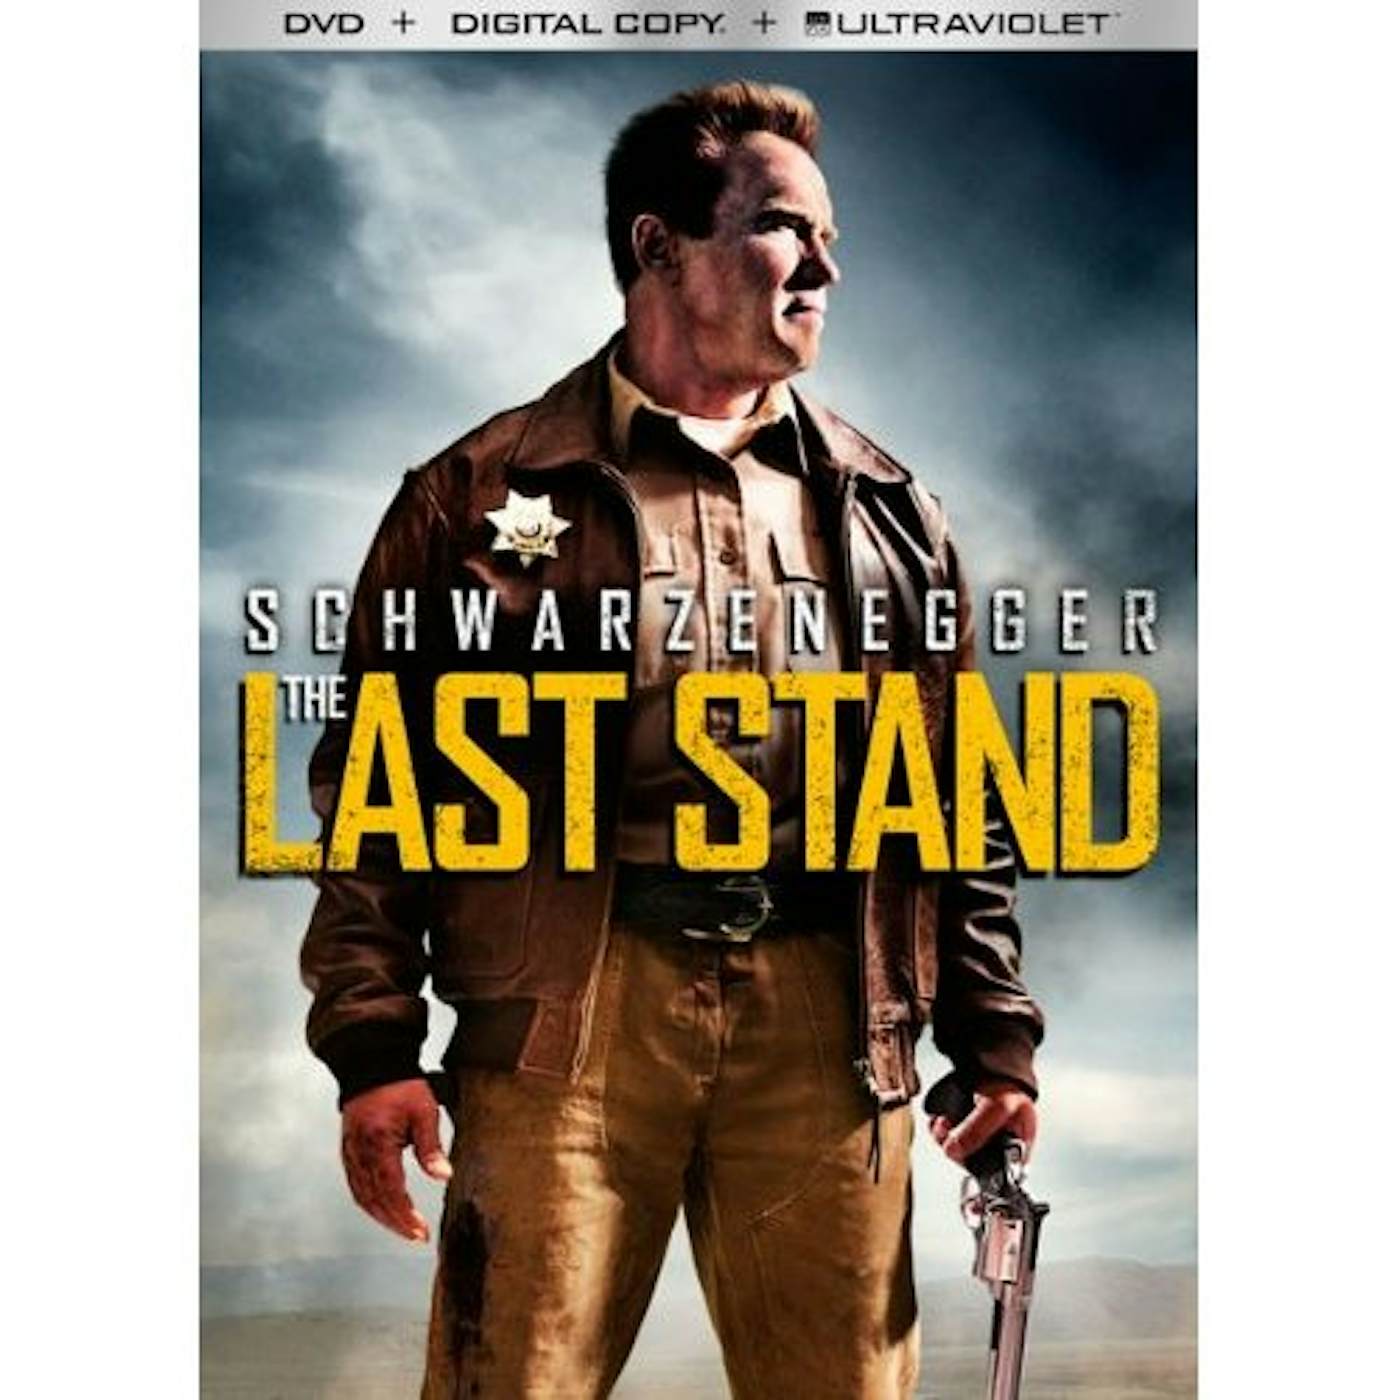 LAST STAND DVD